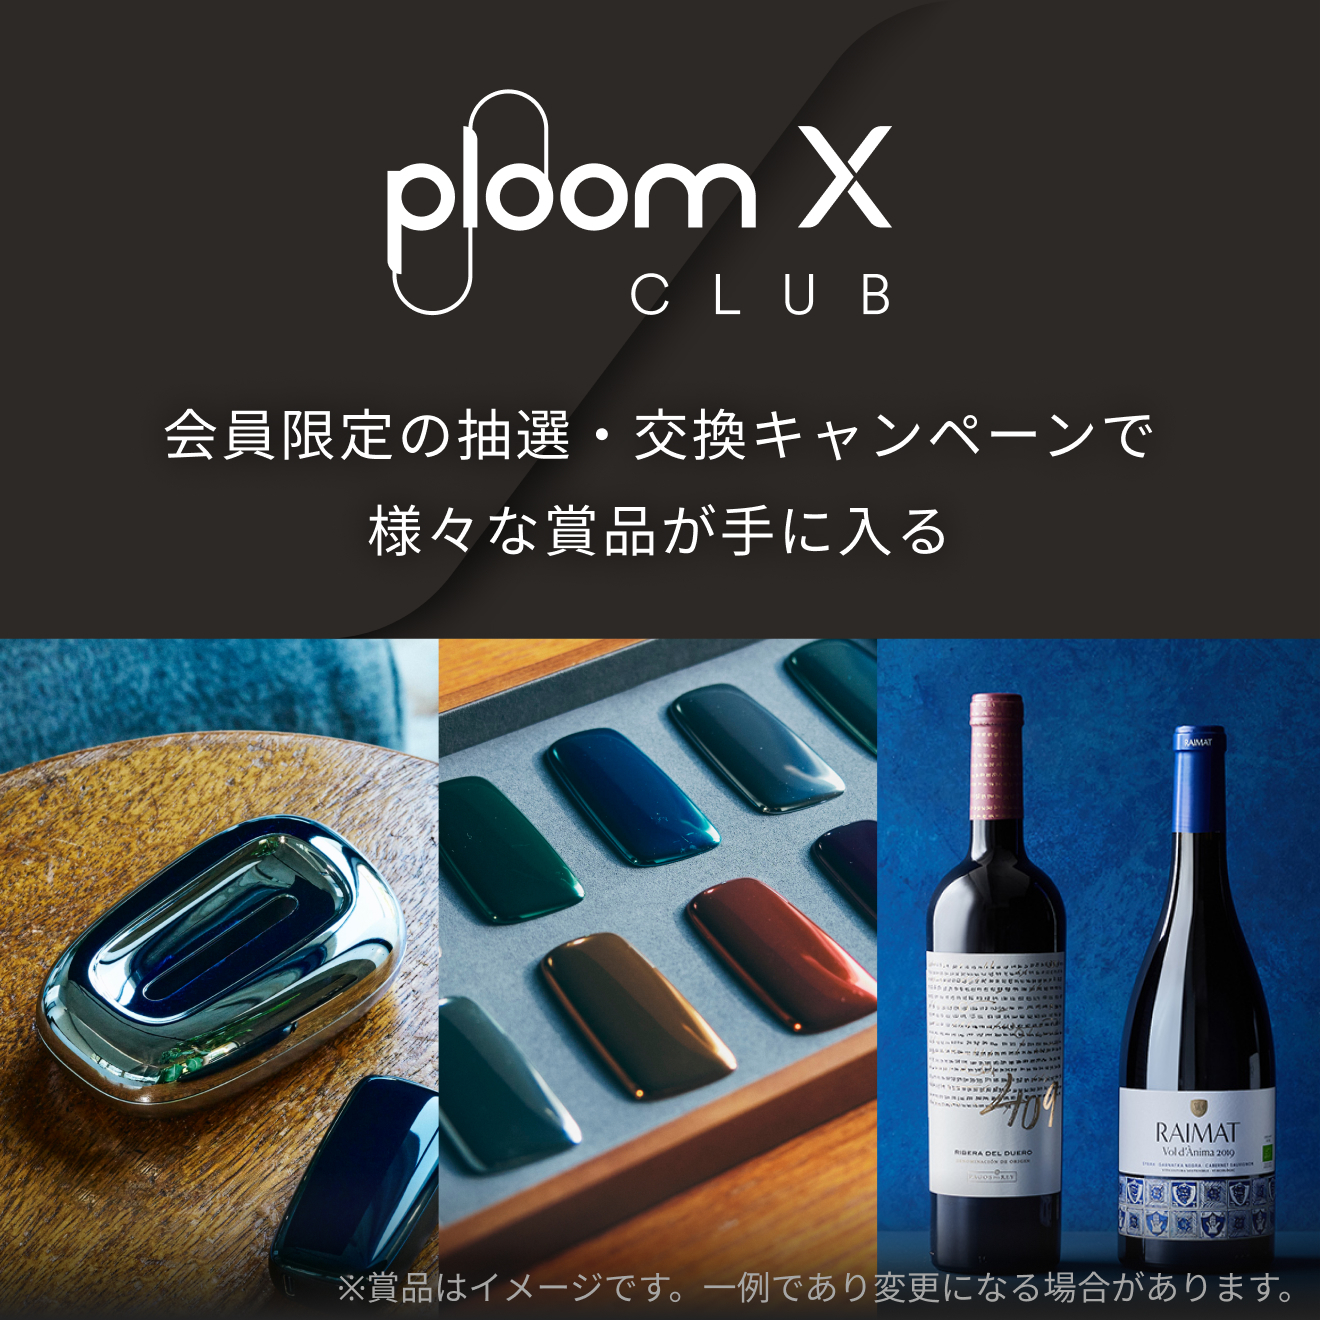 Ploom X CLUB会員限定の抽選・交換キャンペーンで様々な賞品が手に入る